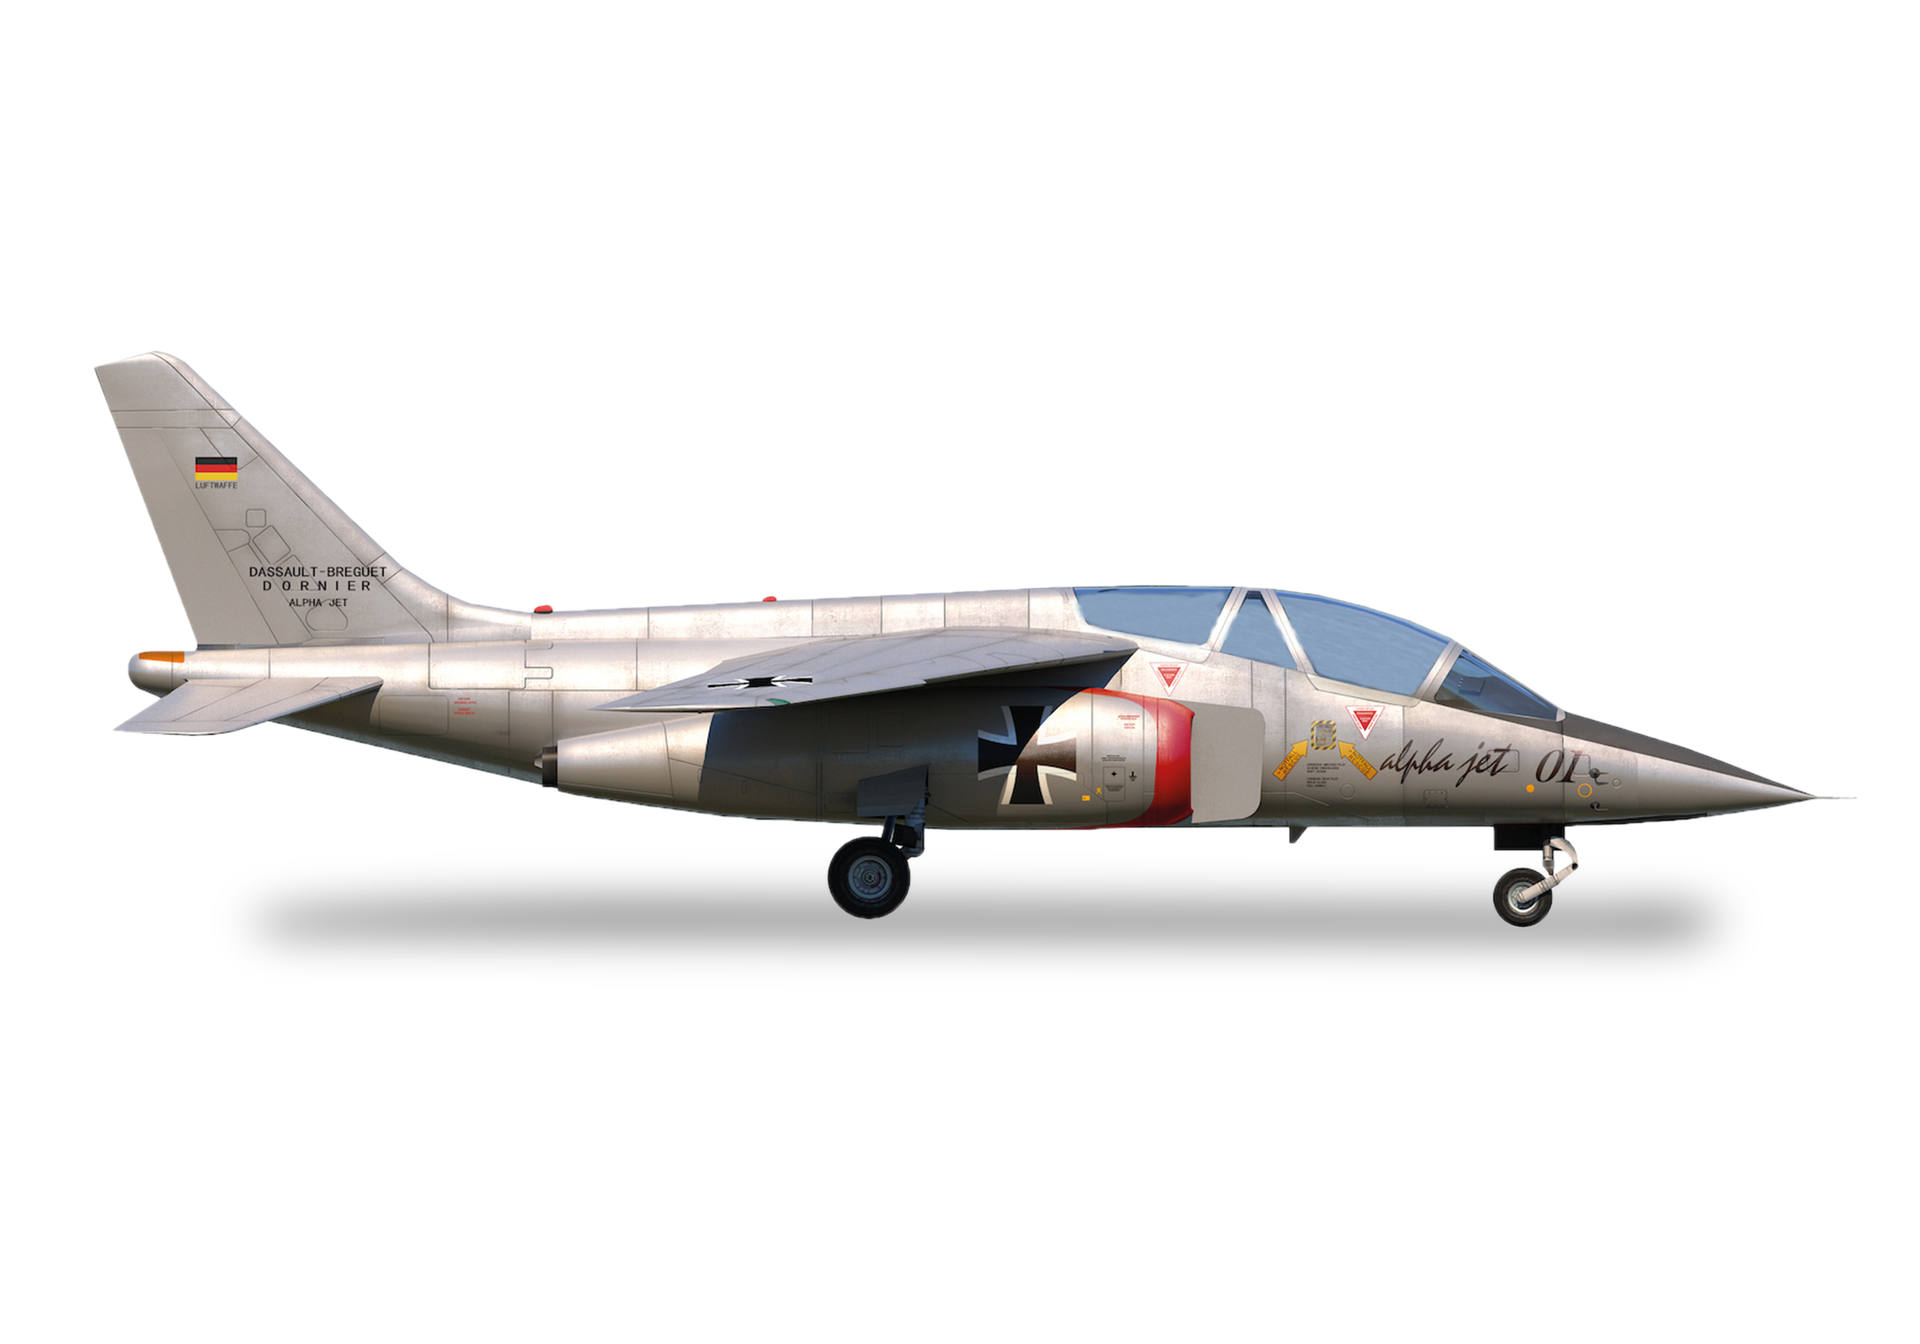 Alpha Jet 01 Prototype – AT24